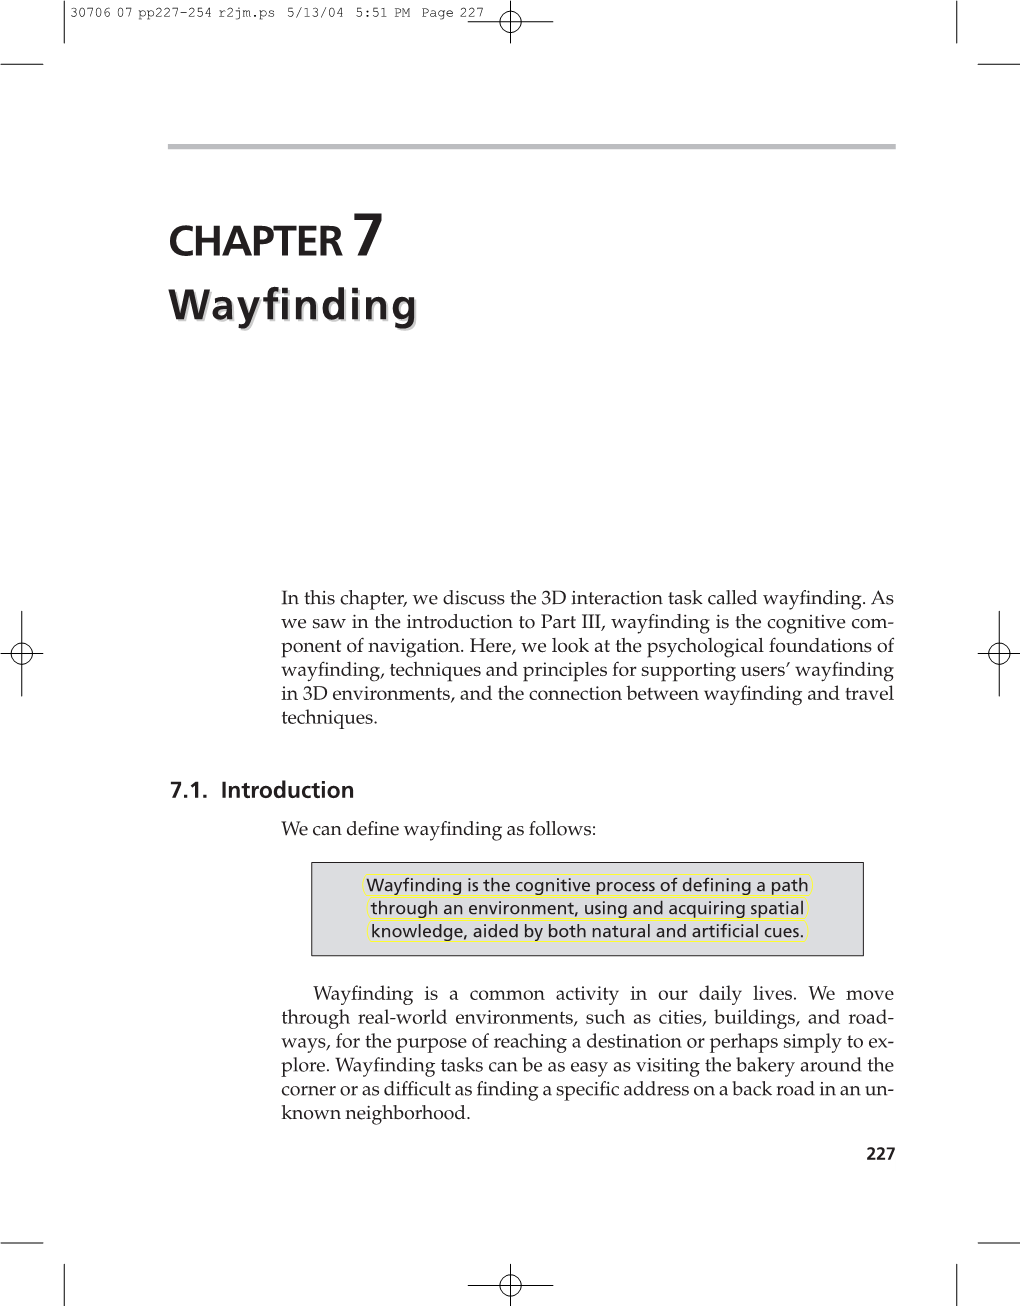 CHAPTER 7 Wayfinding